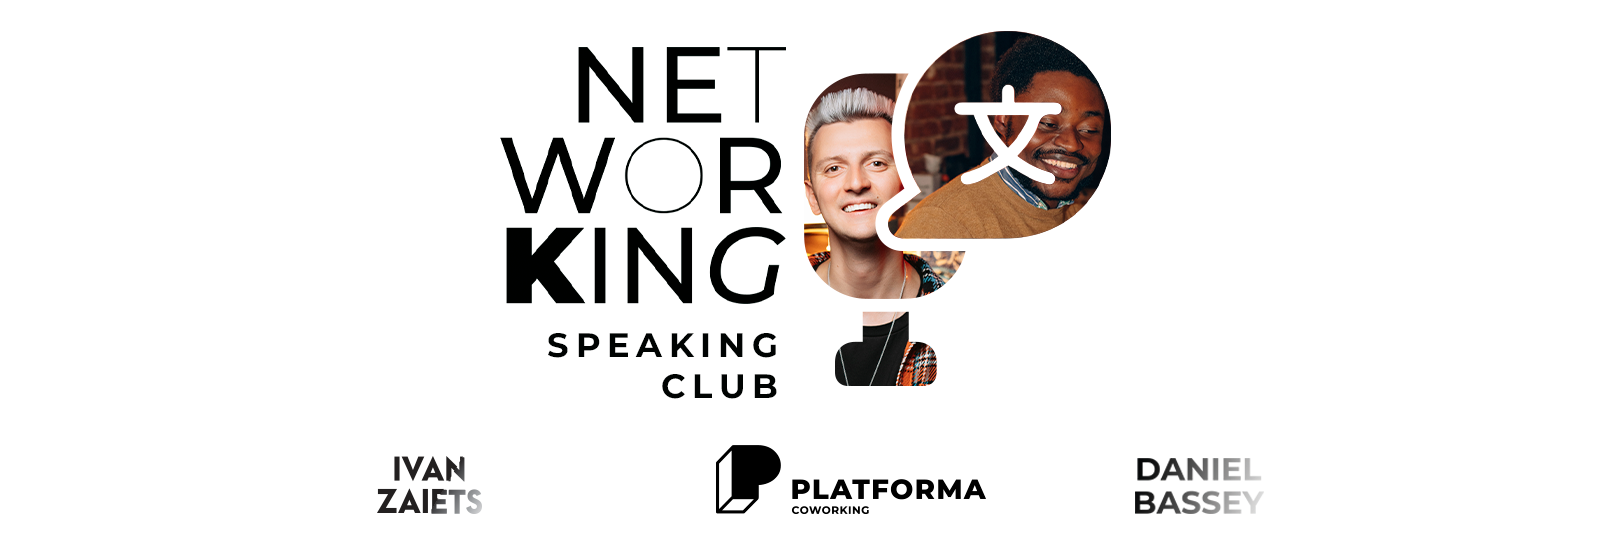 Networking Speaking Club #9